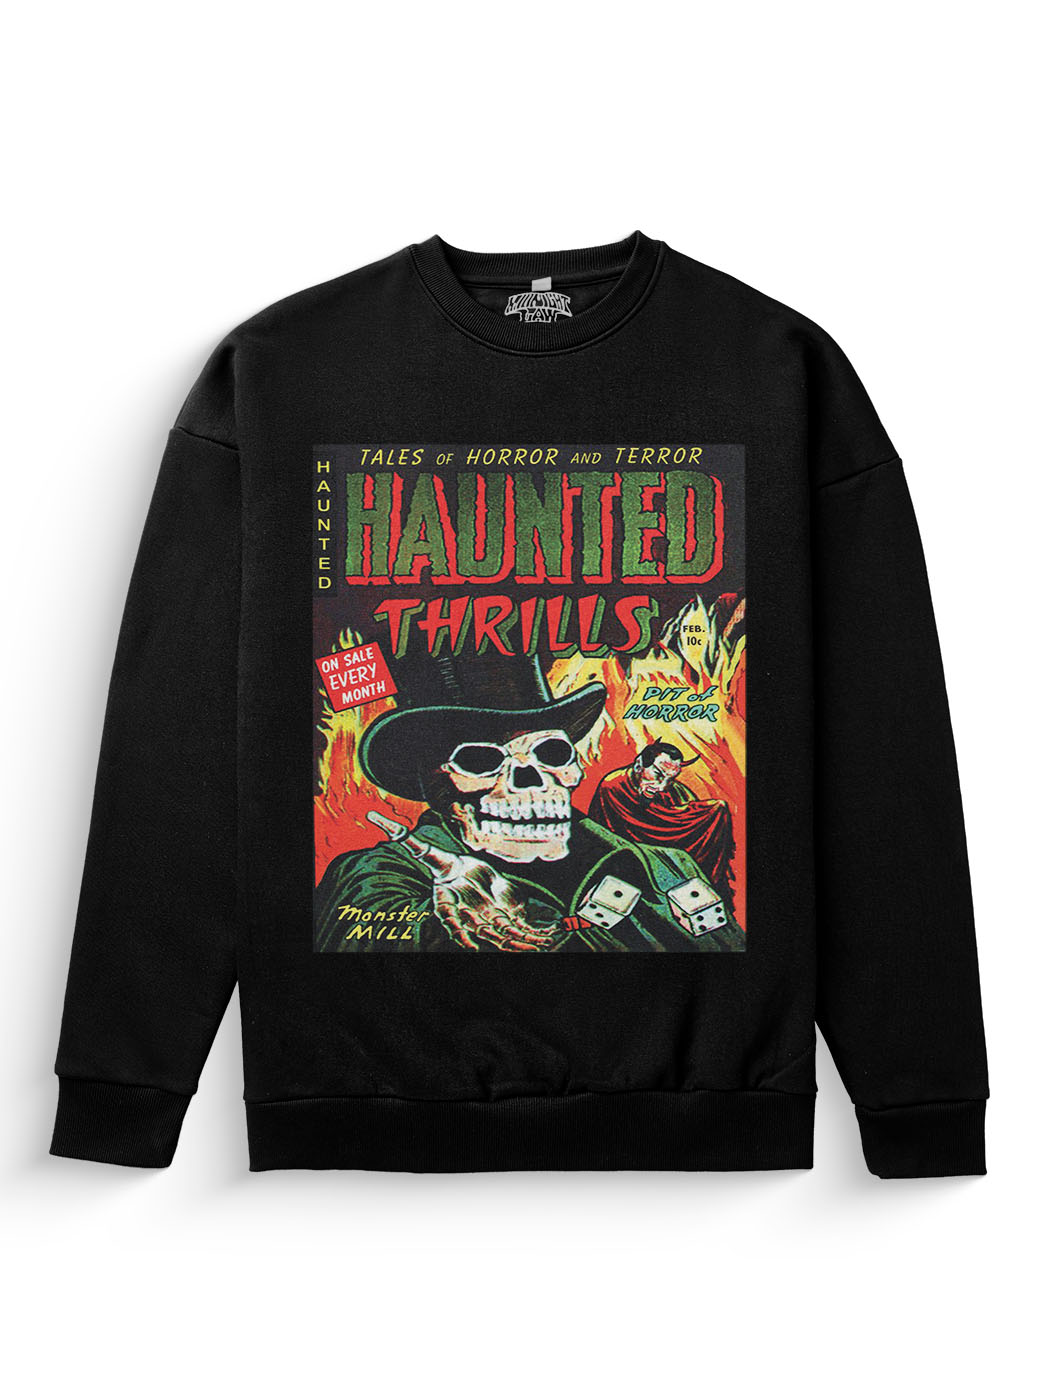 Haunted Thrills Sweatshirt